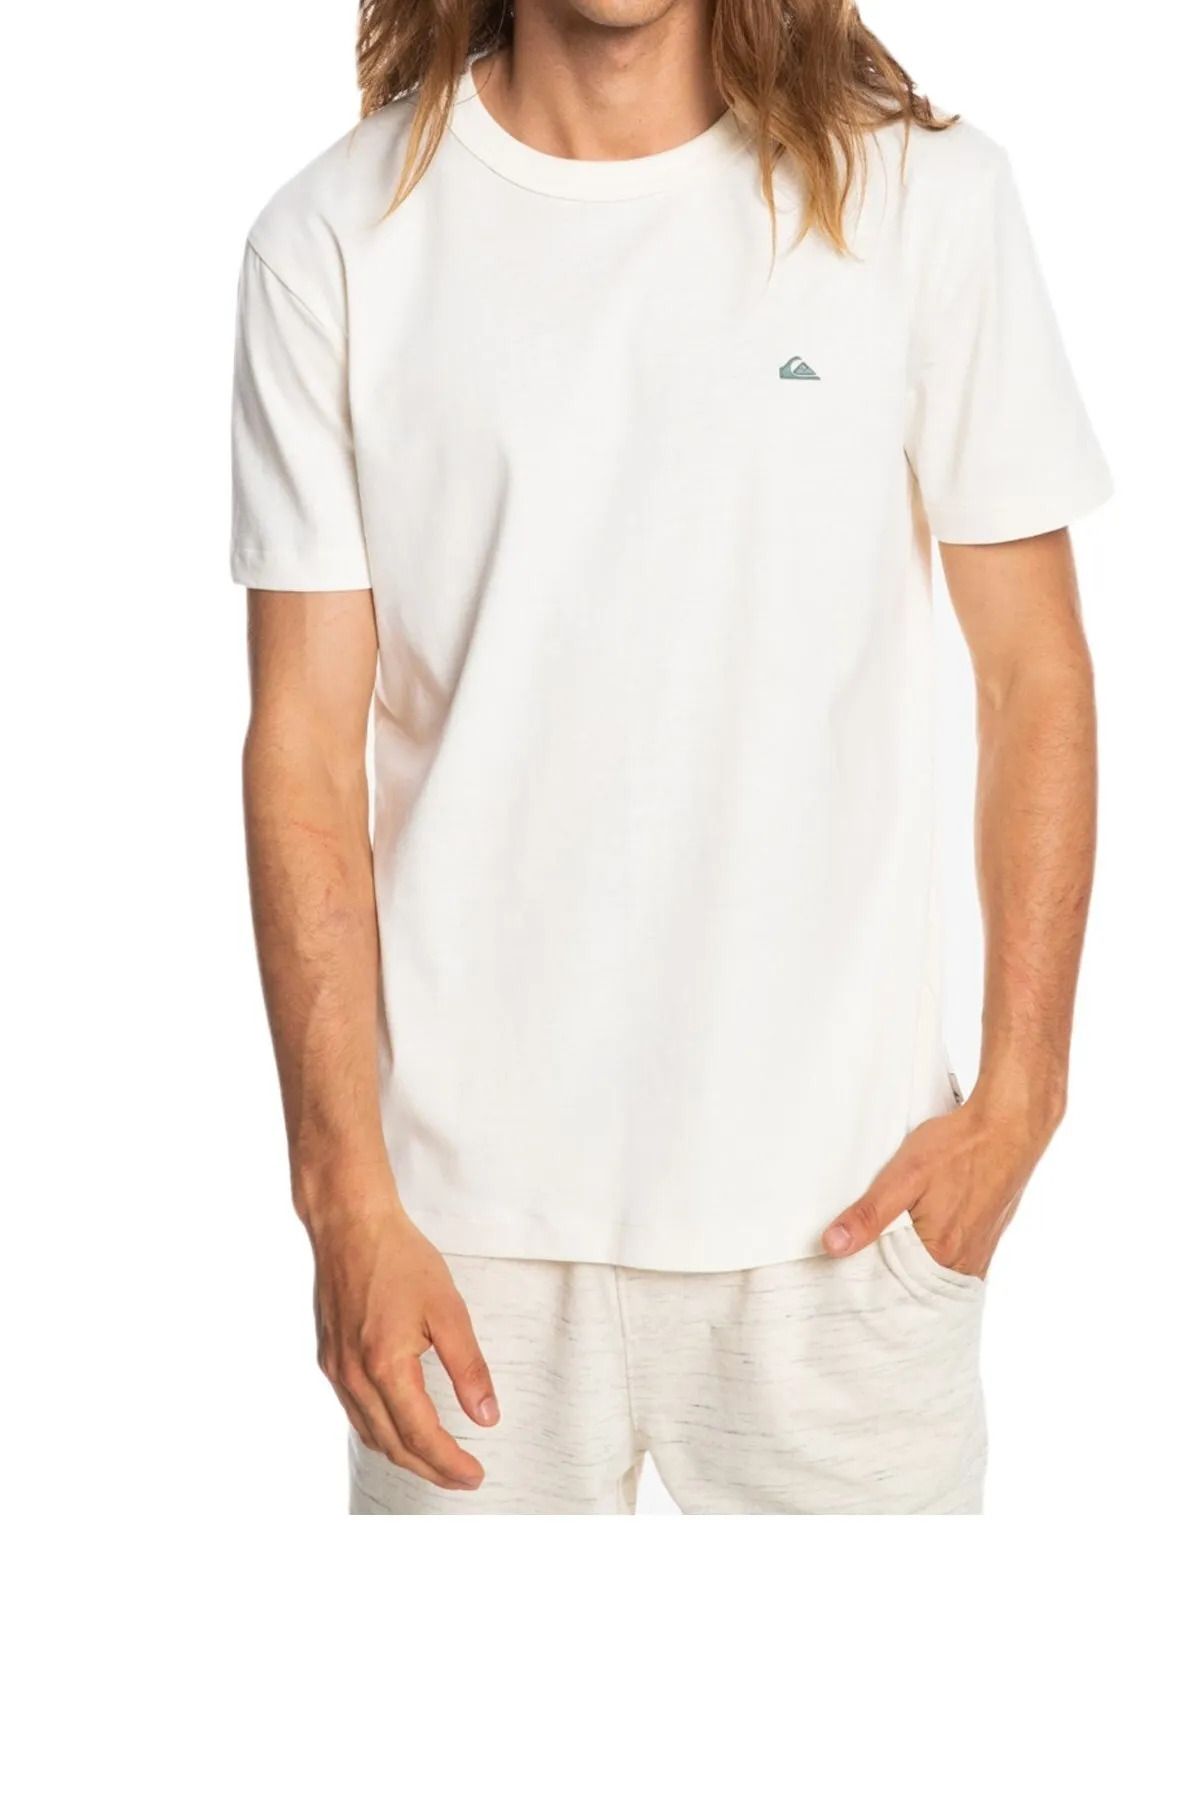 Quiksilver Comp Logo Ss Erkek Beyaz Günlük Stil Tişört Eqyzt06534-wbb0